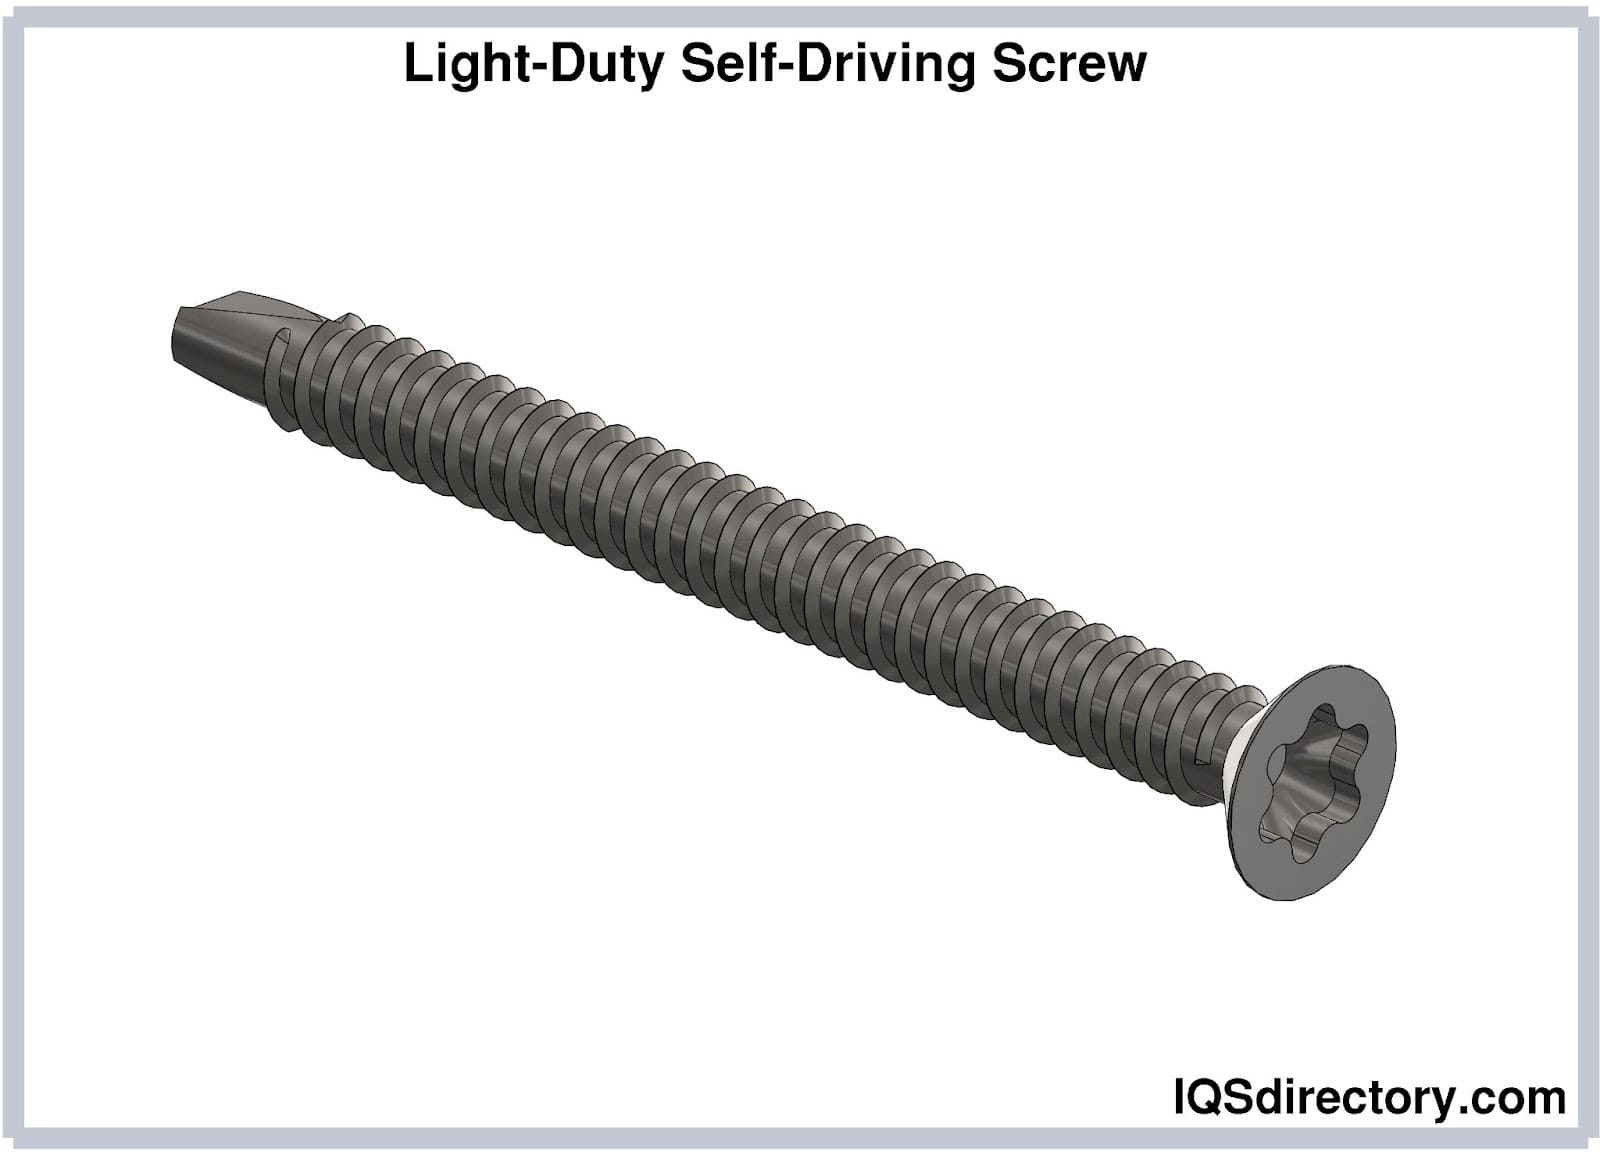 Light-Duty Self-Driving Screw